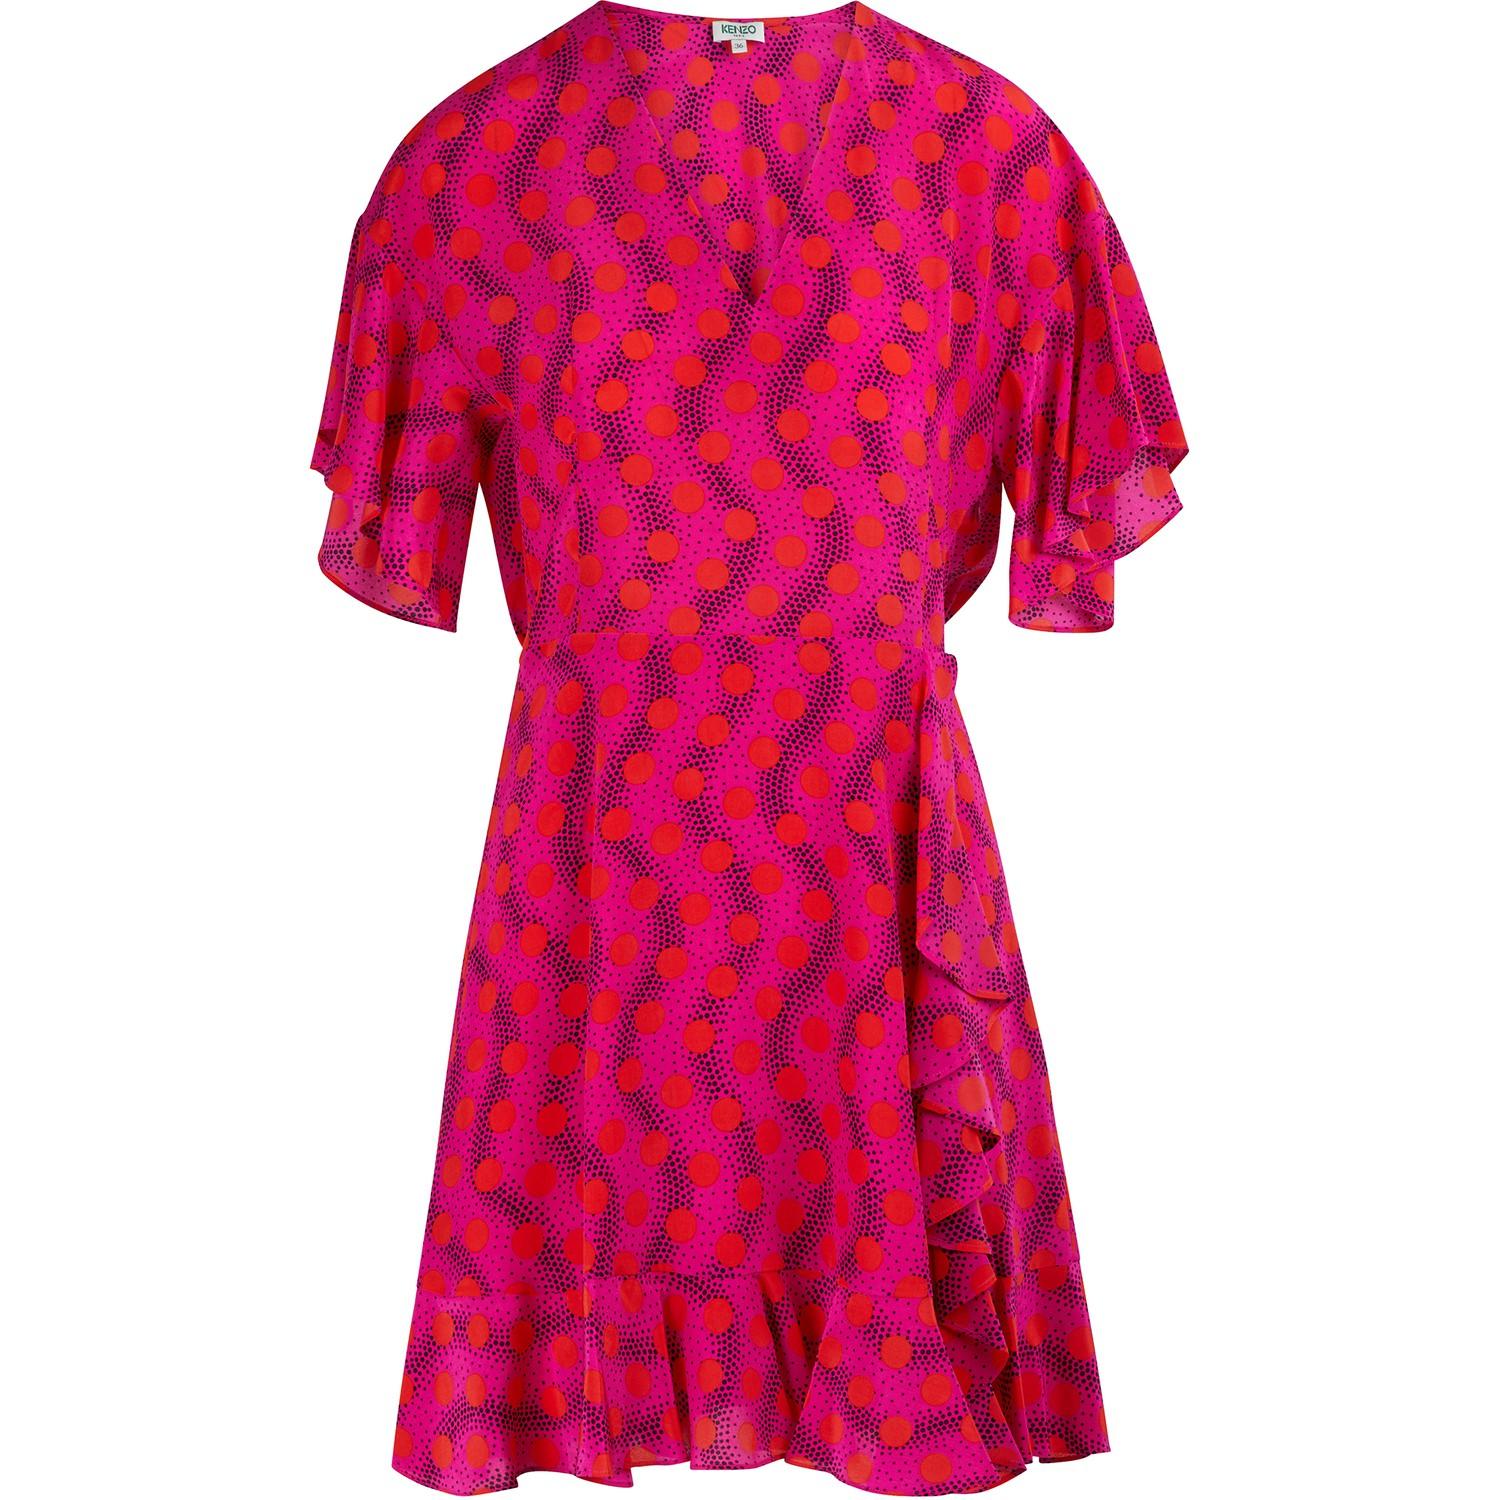 KENZO Polka Dot Mini Dress in Deep Pink (Pink) - Lyst